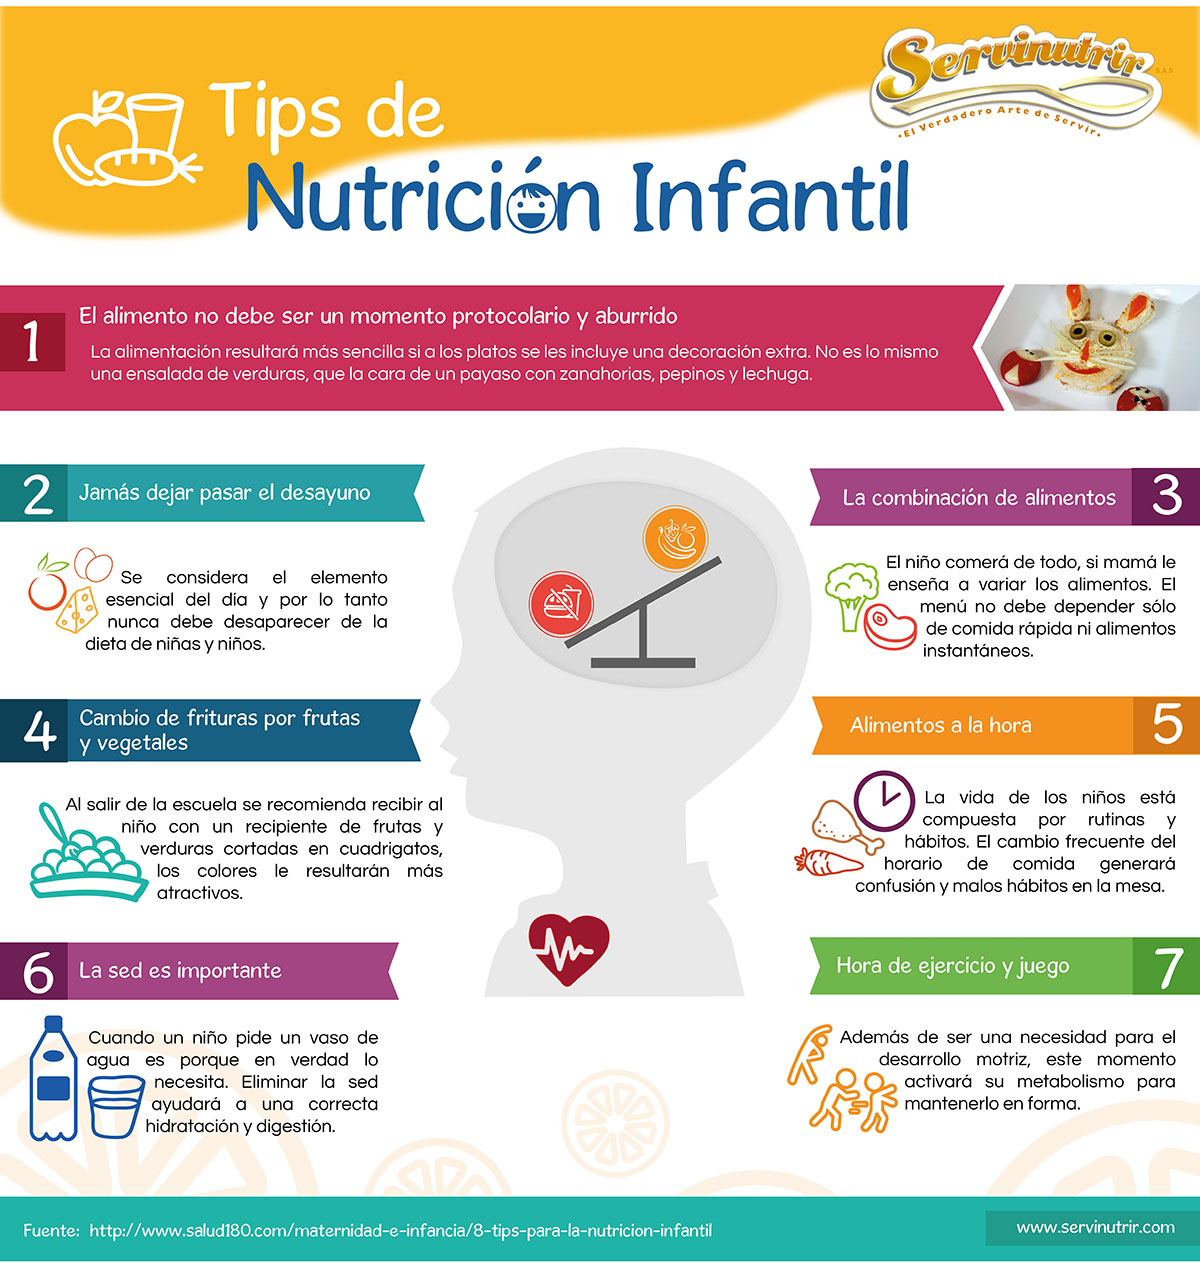 Tips de Nutrición Infantil